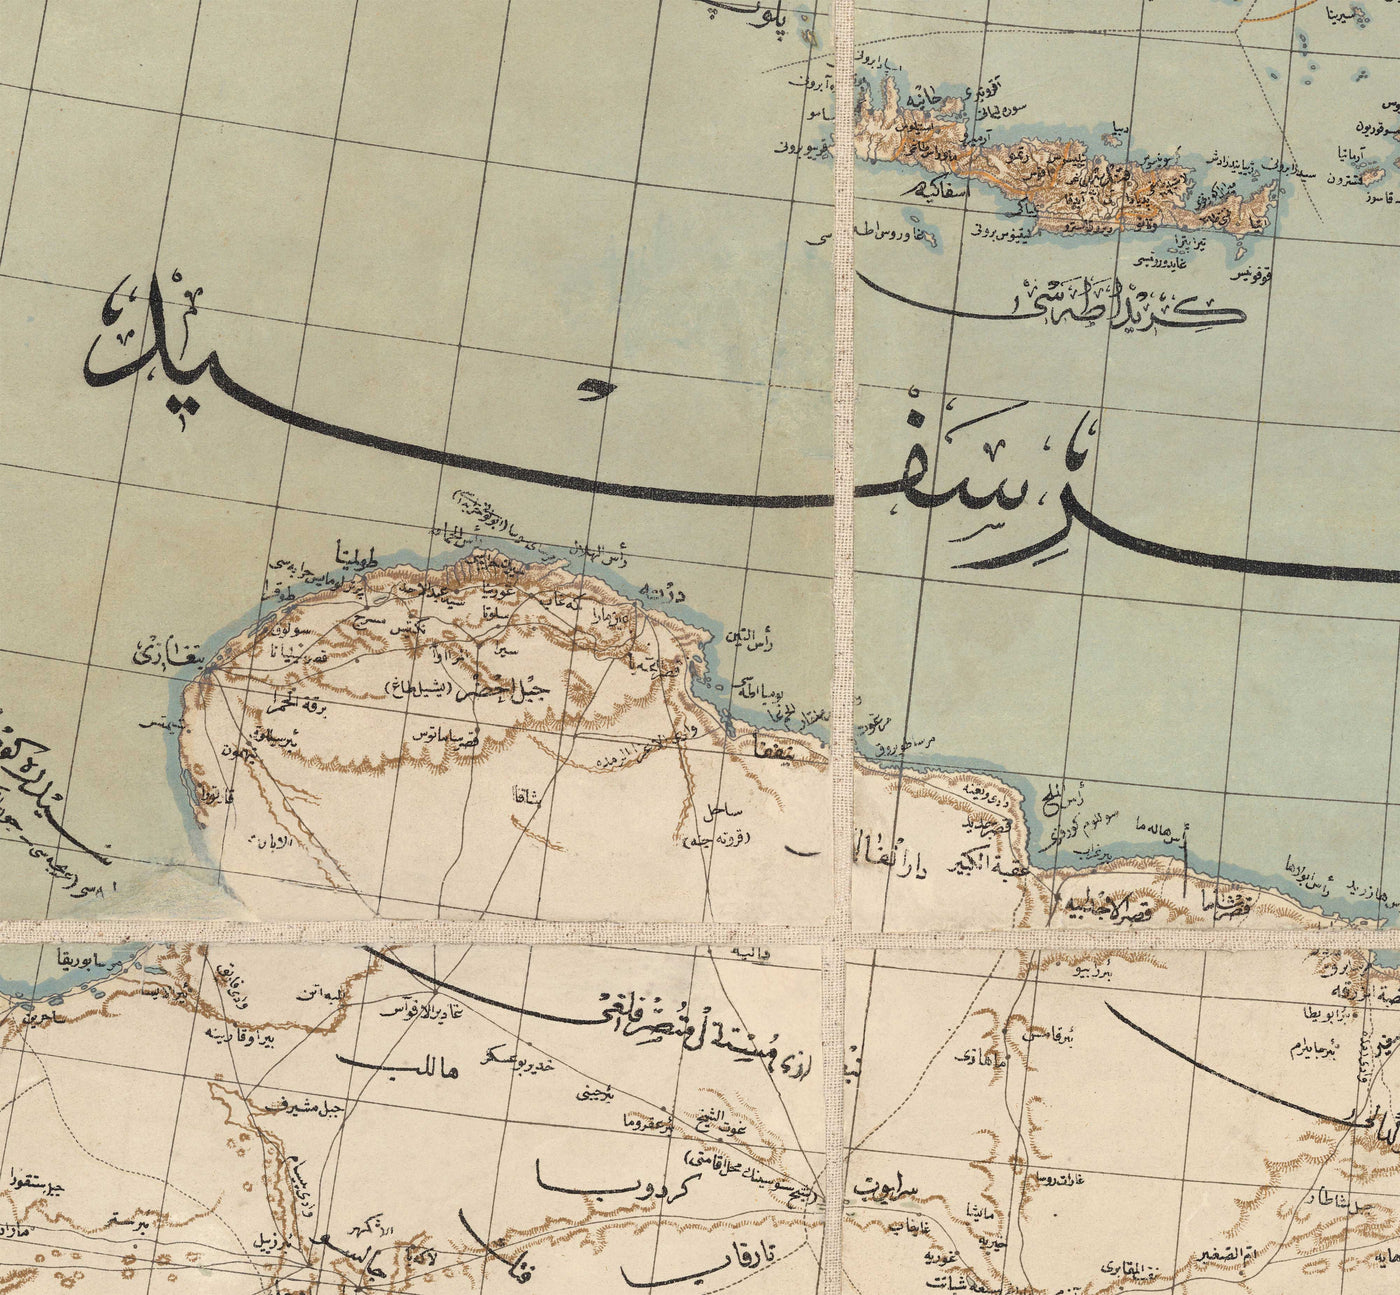 Old Map of the Middle East in Arabic Script, 1890 - Ottoman Empire, Balkans, Arabian Peninsula, Black Sea